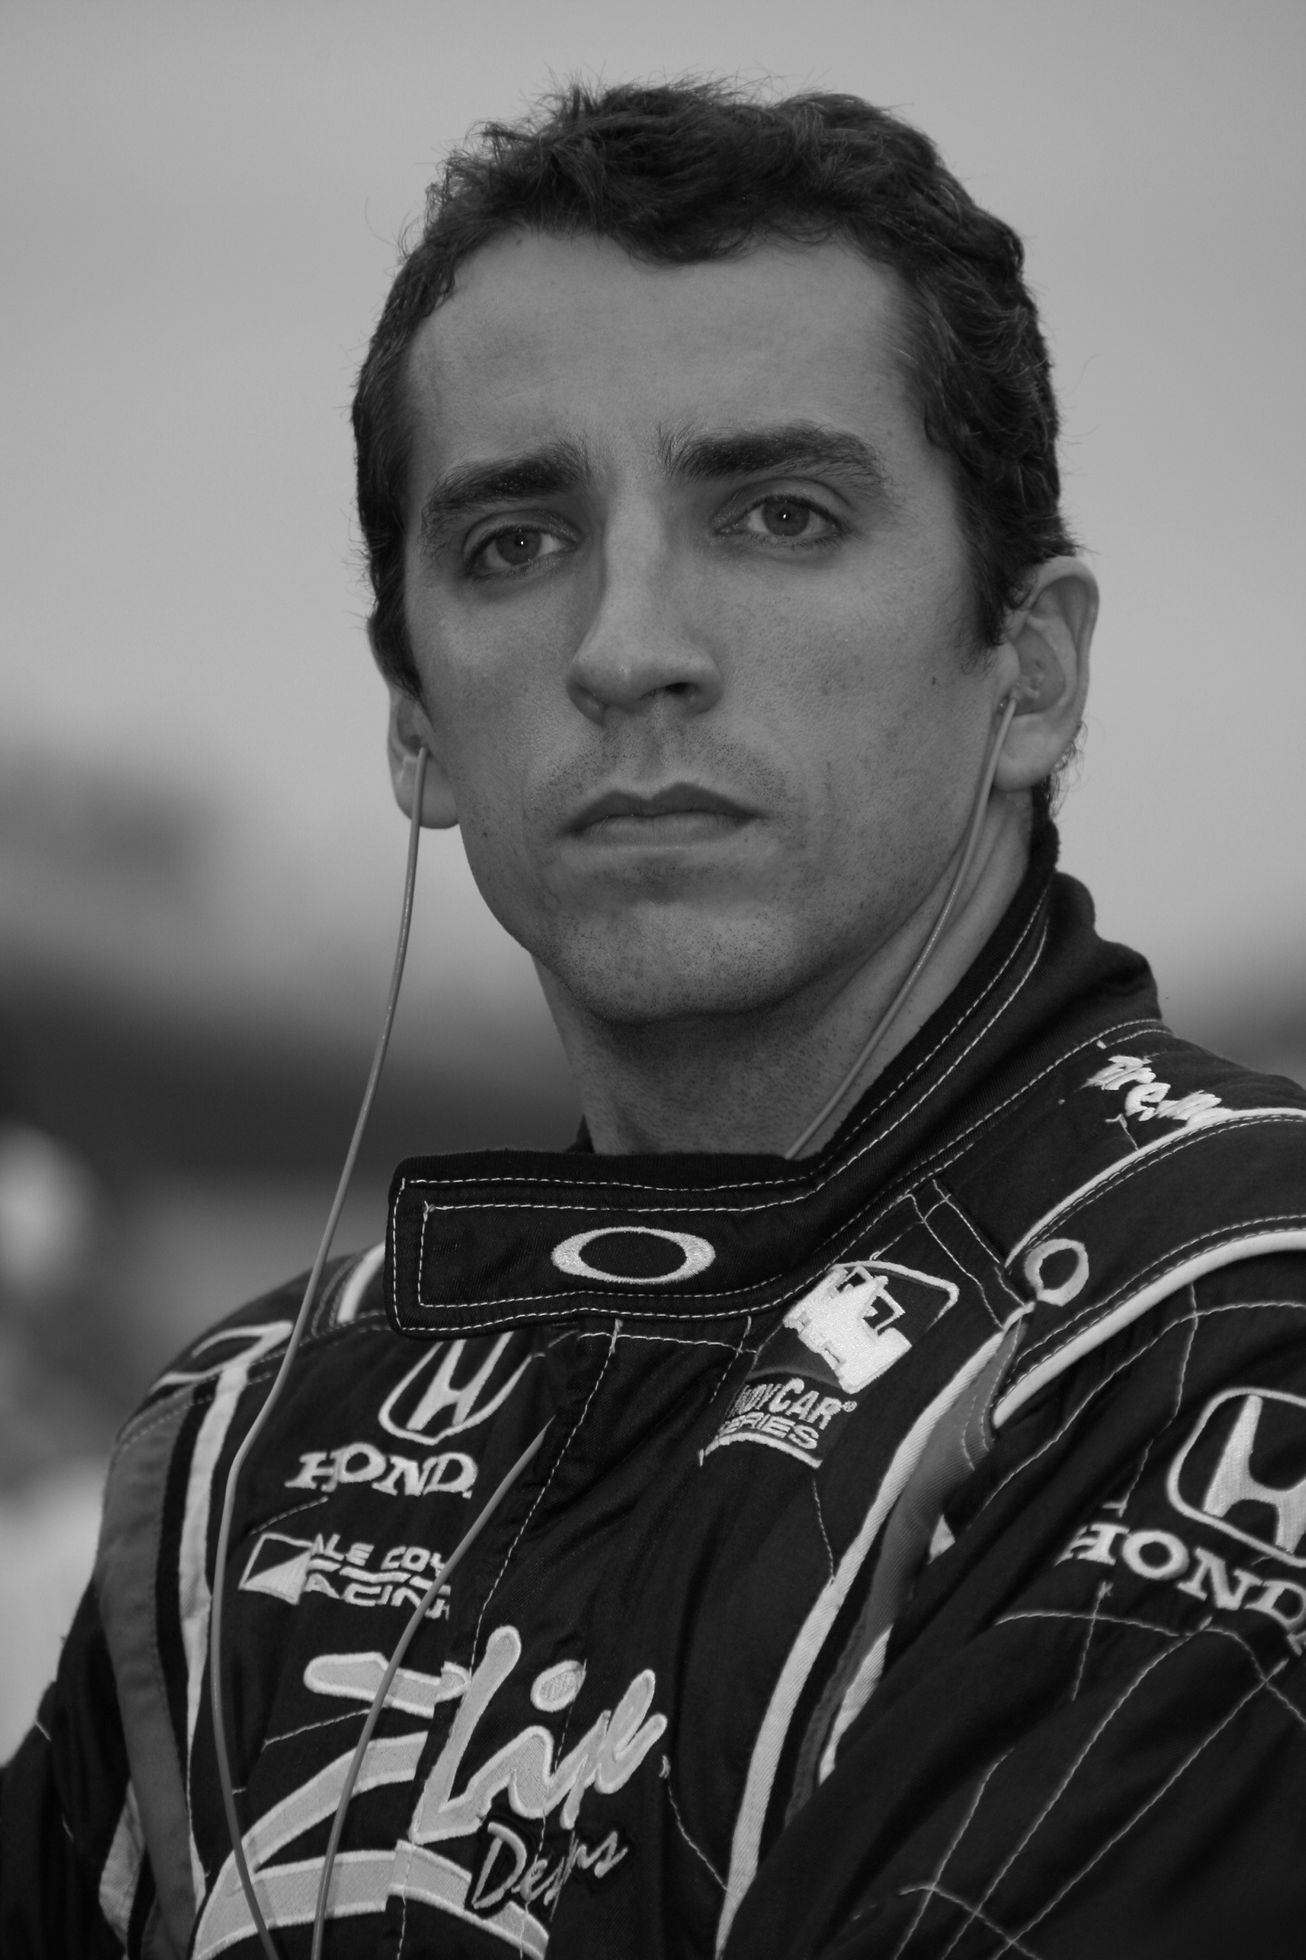 IndyCar 2015: Justin Wilson